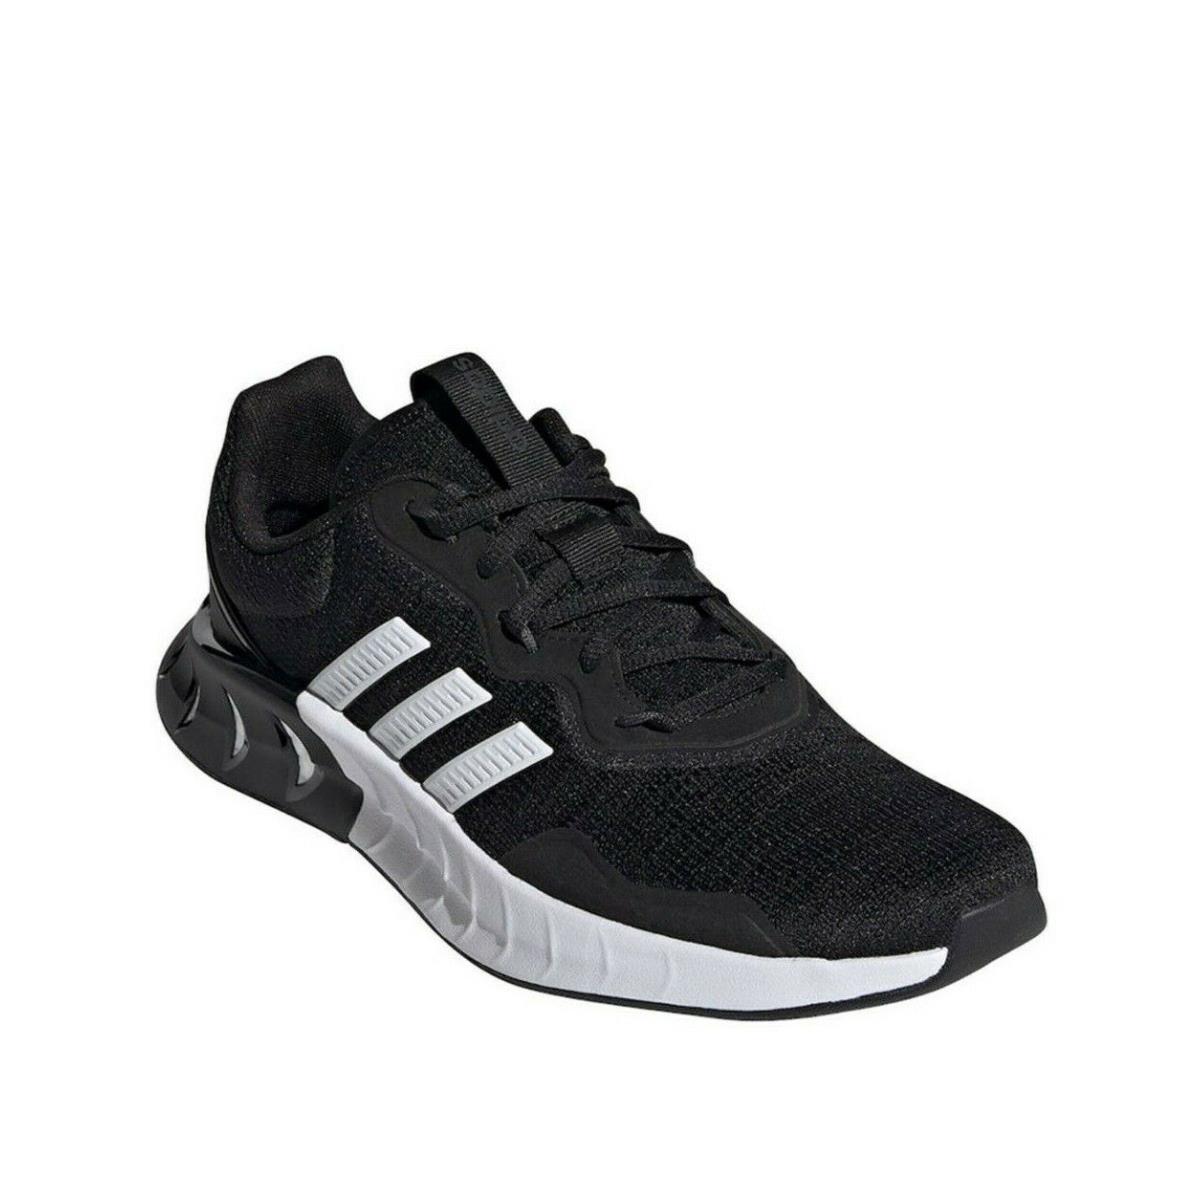 Mens Adidas Kaptir Super Boost Running Shoes Athletic Sneakers Black / White